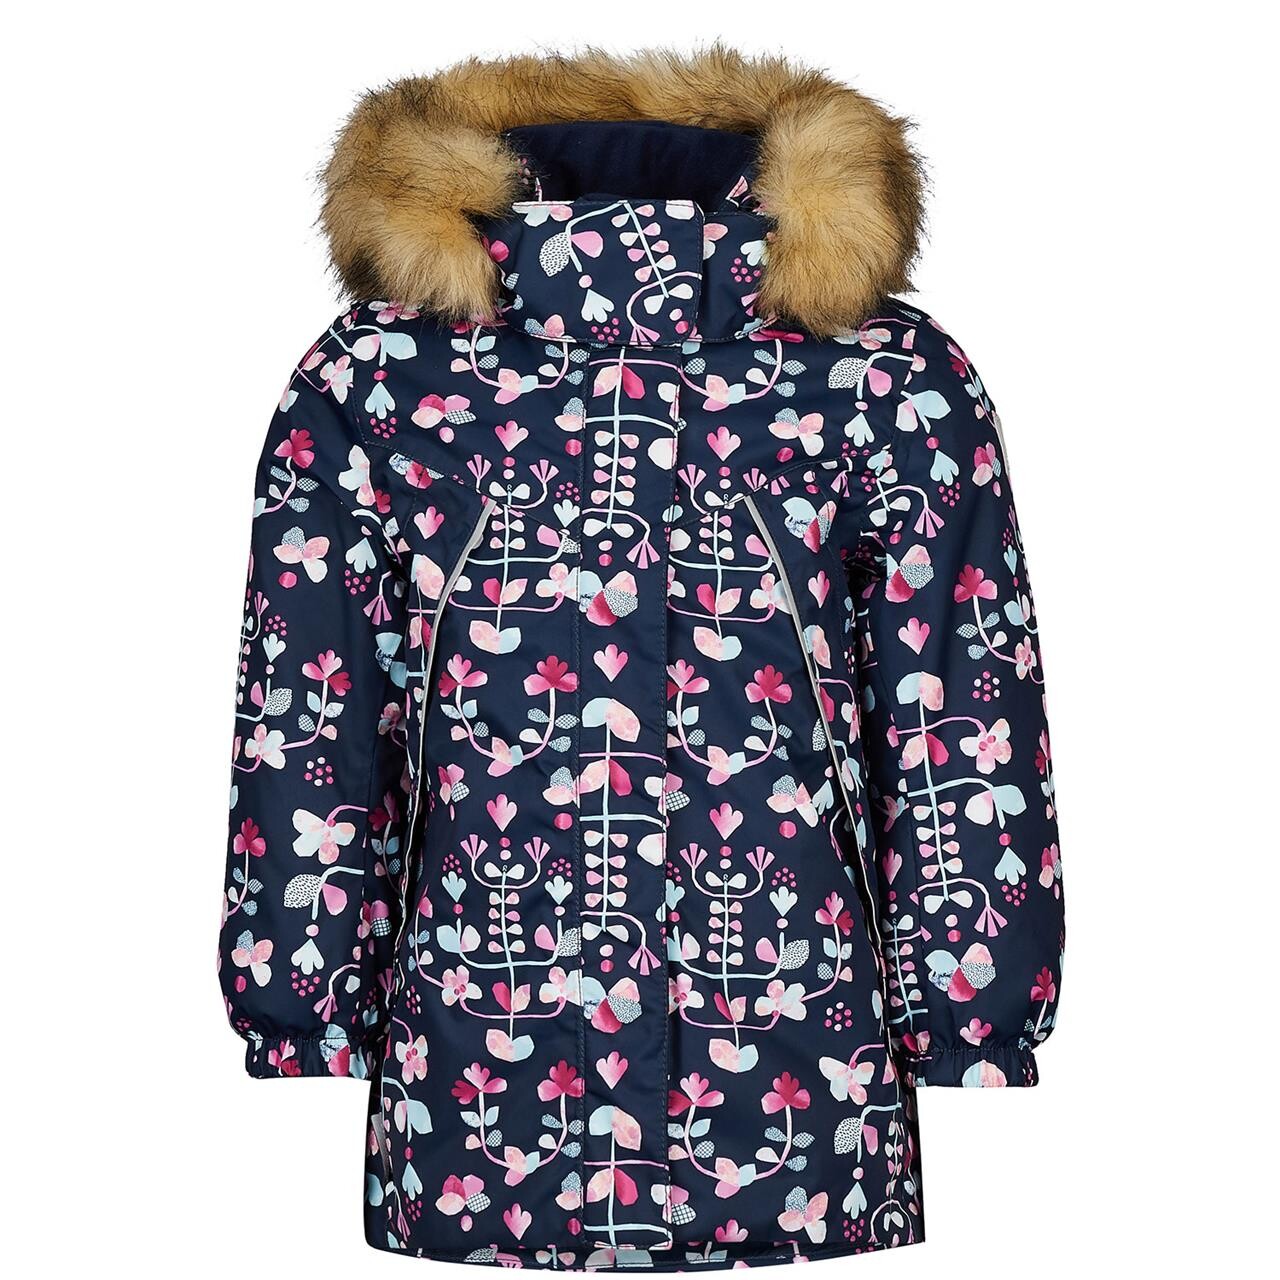 #2 - Reima Kids Reimatec Winter Jacket Muhvi (Blå (NAVY) 92 cm)